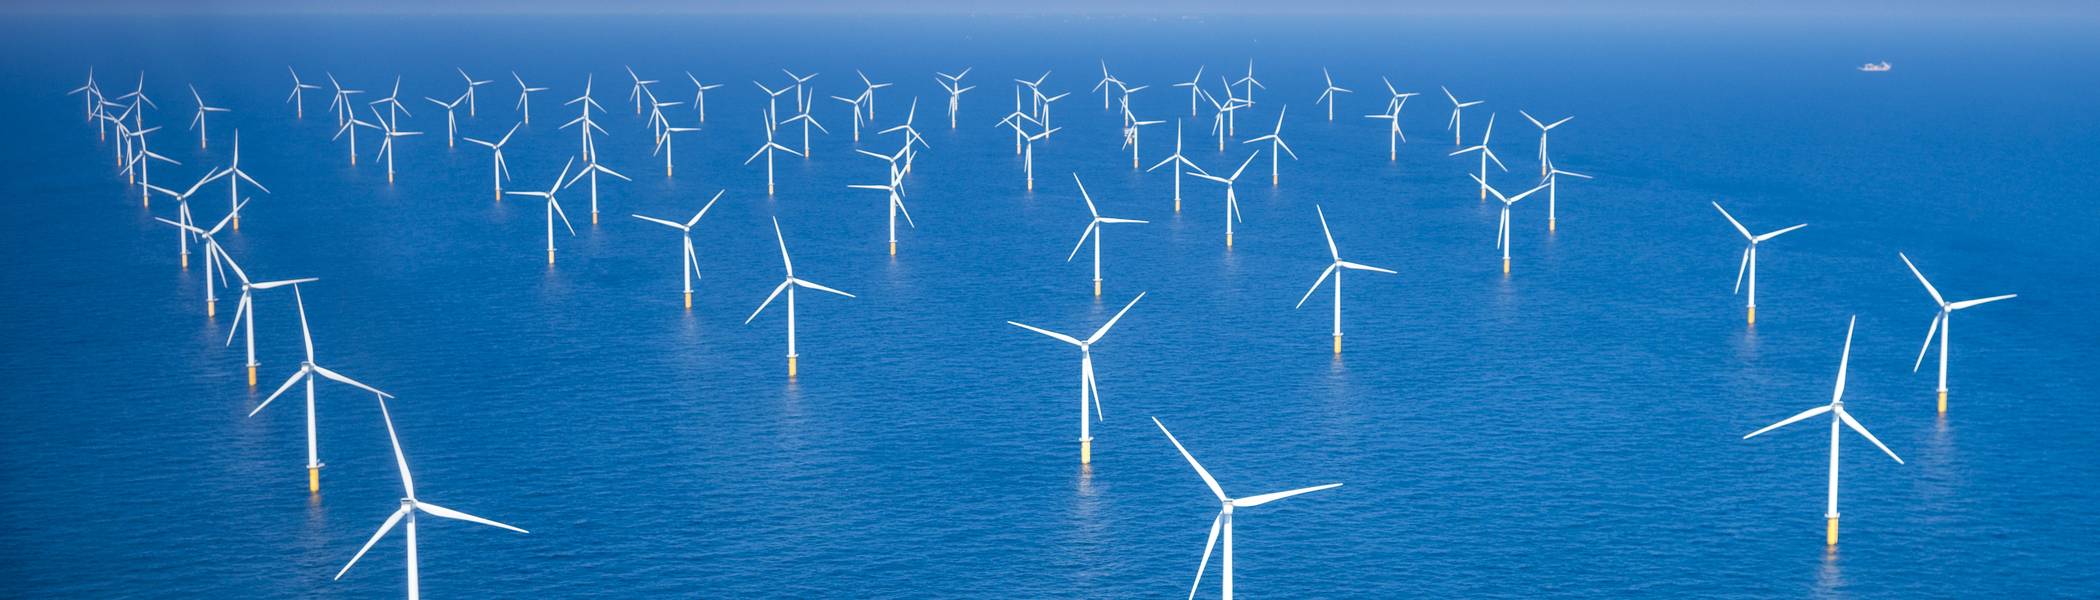 A sea full with wind turbines